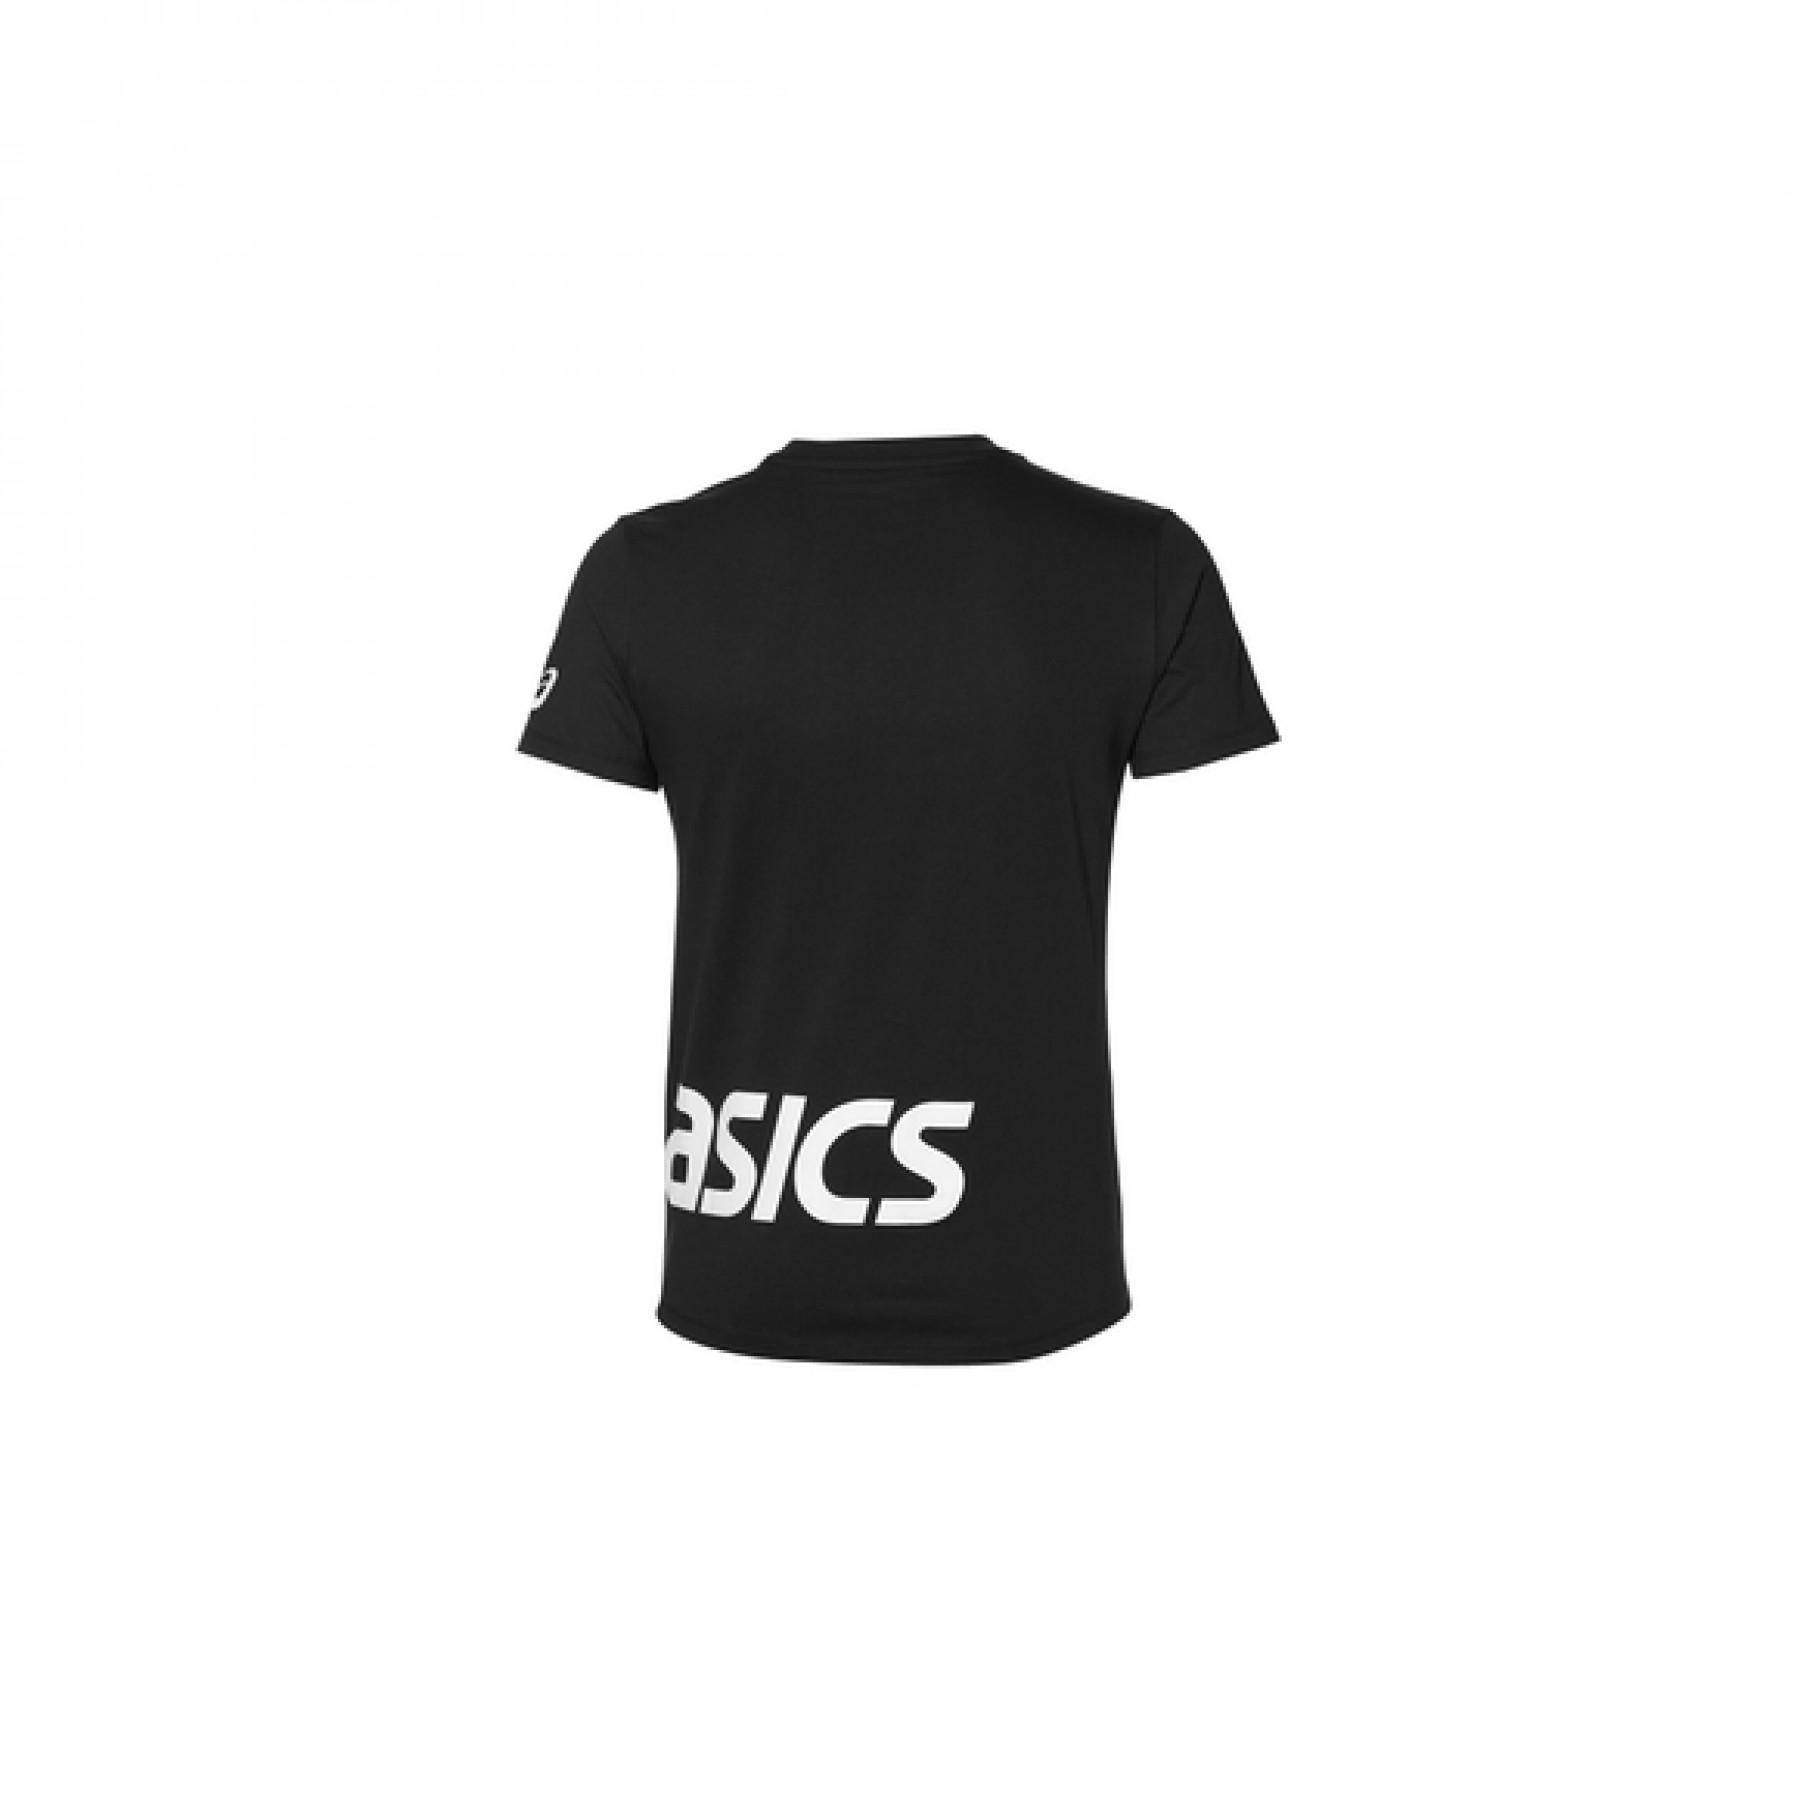 Koszulka Asics low big logo